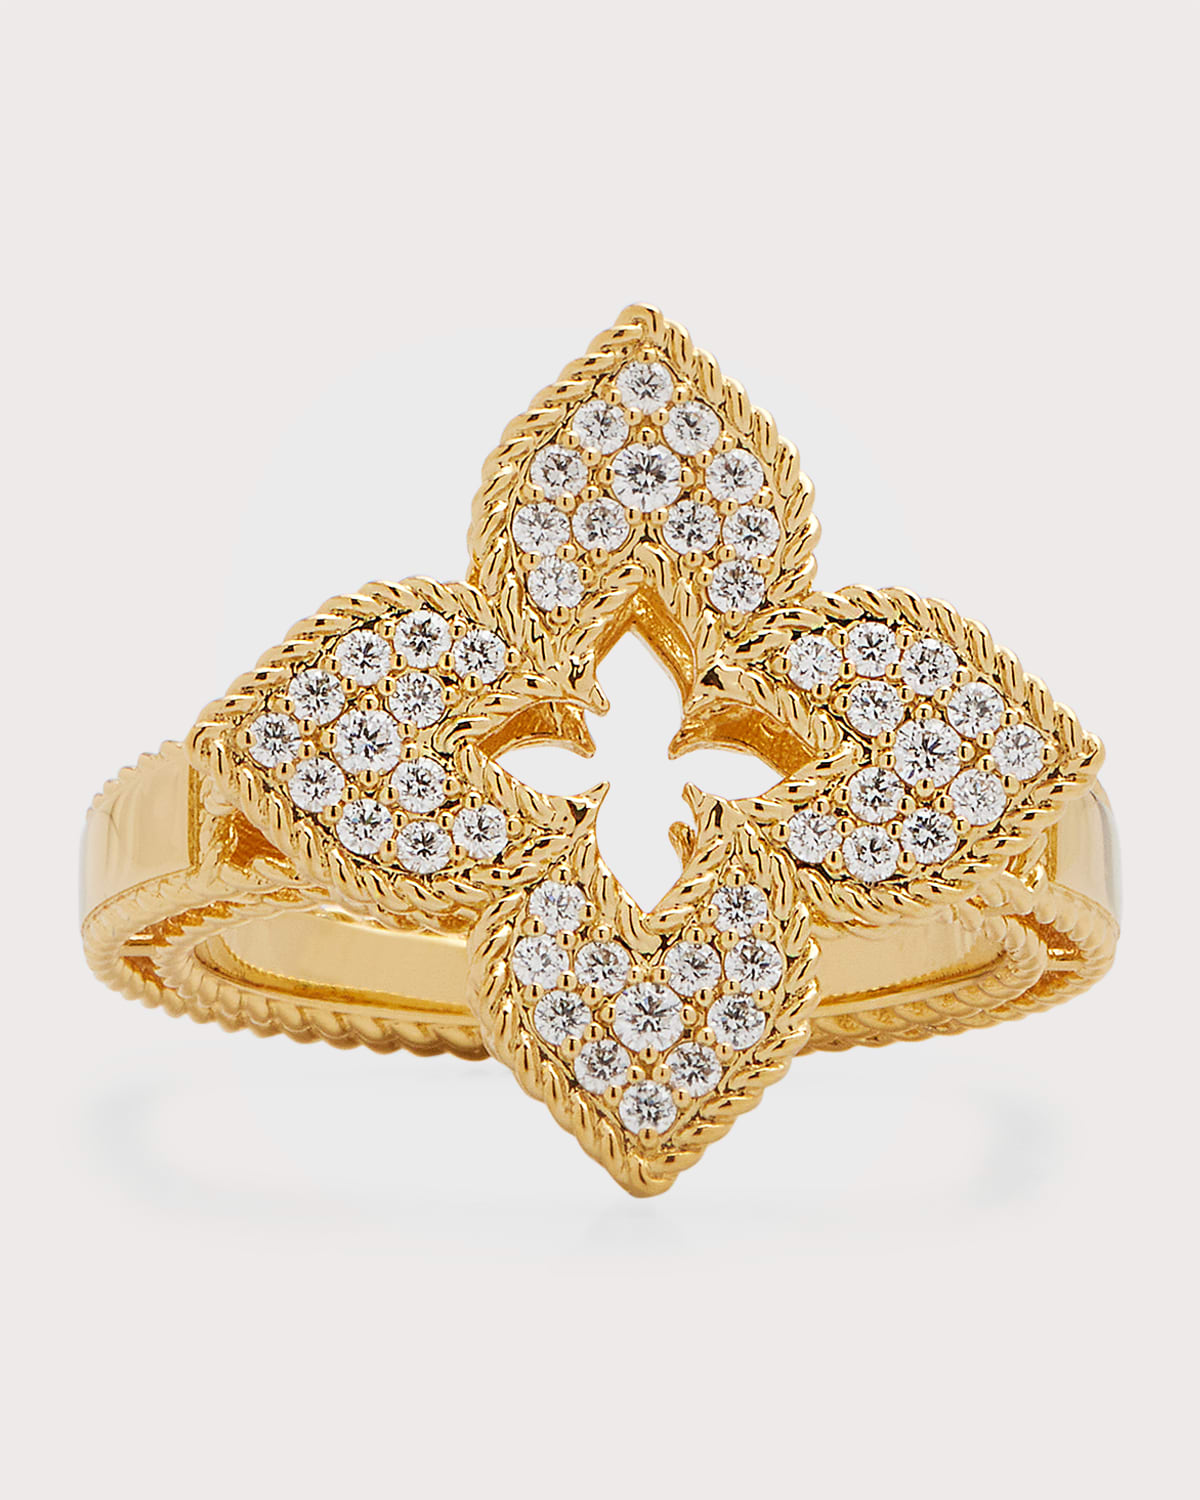 Venetian Princess 18K Yellow Gold Diamond Ring, Size 6.5